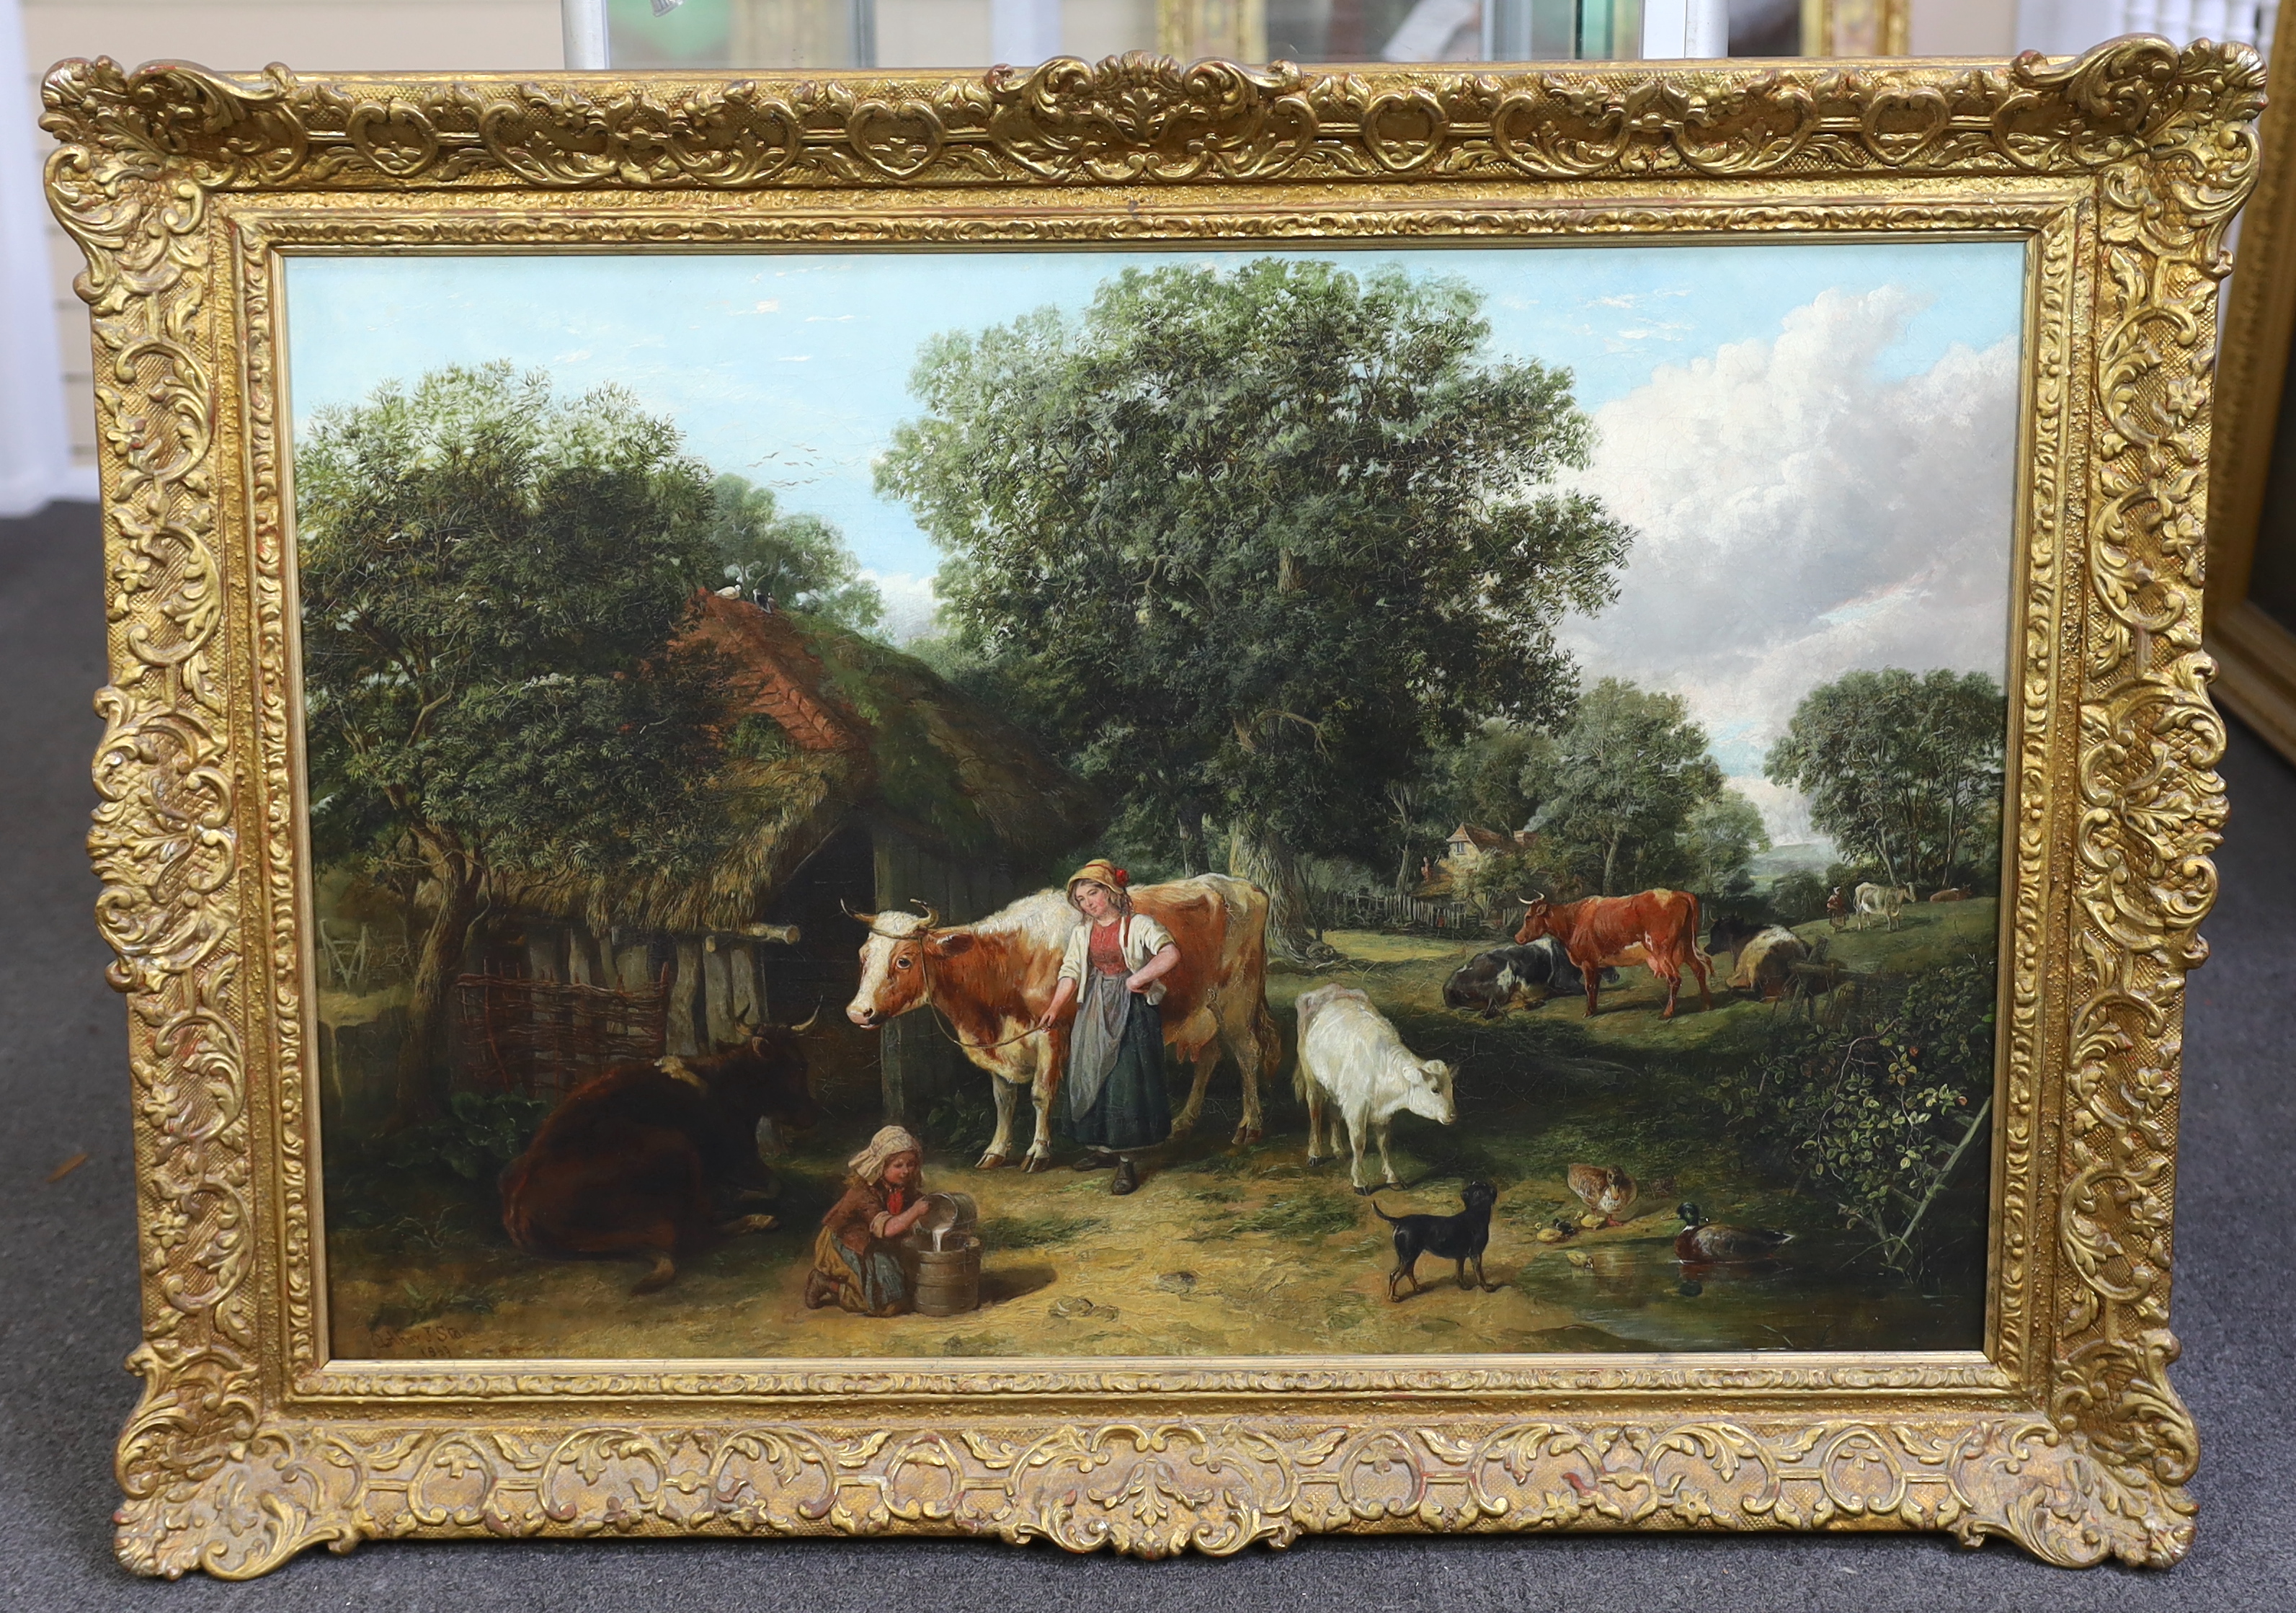 Arthur James Stark (English, 1831-1902), Farm scene with figures and oxen, oil on canvas, 59 x 90cm